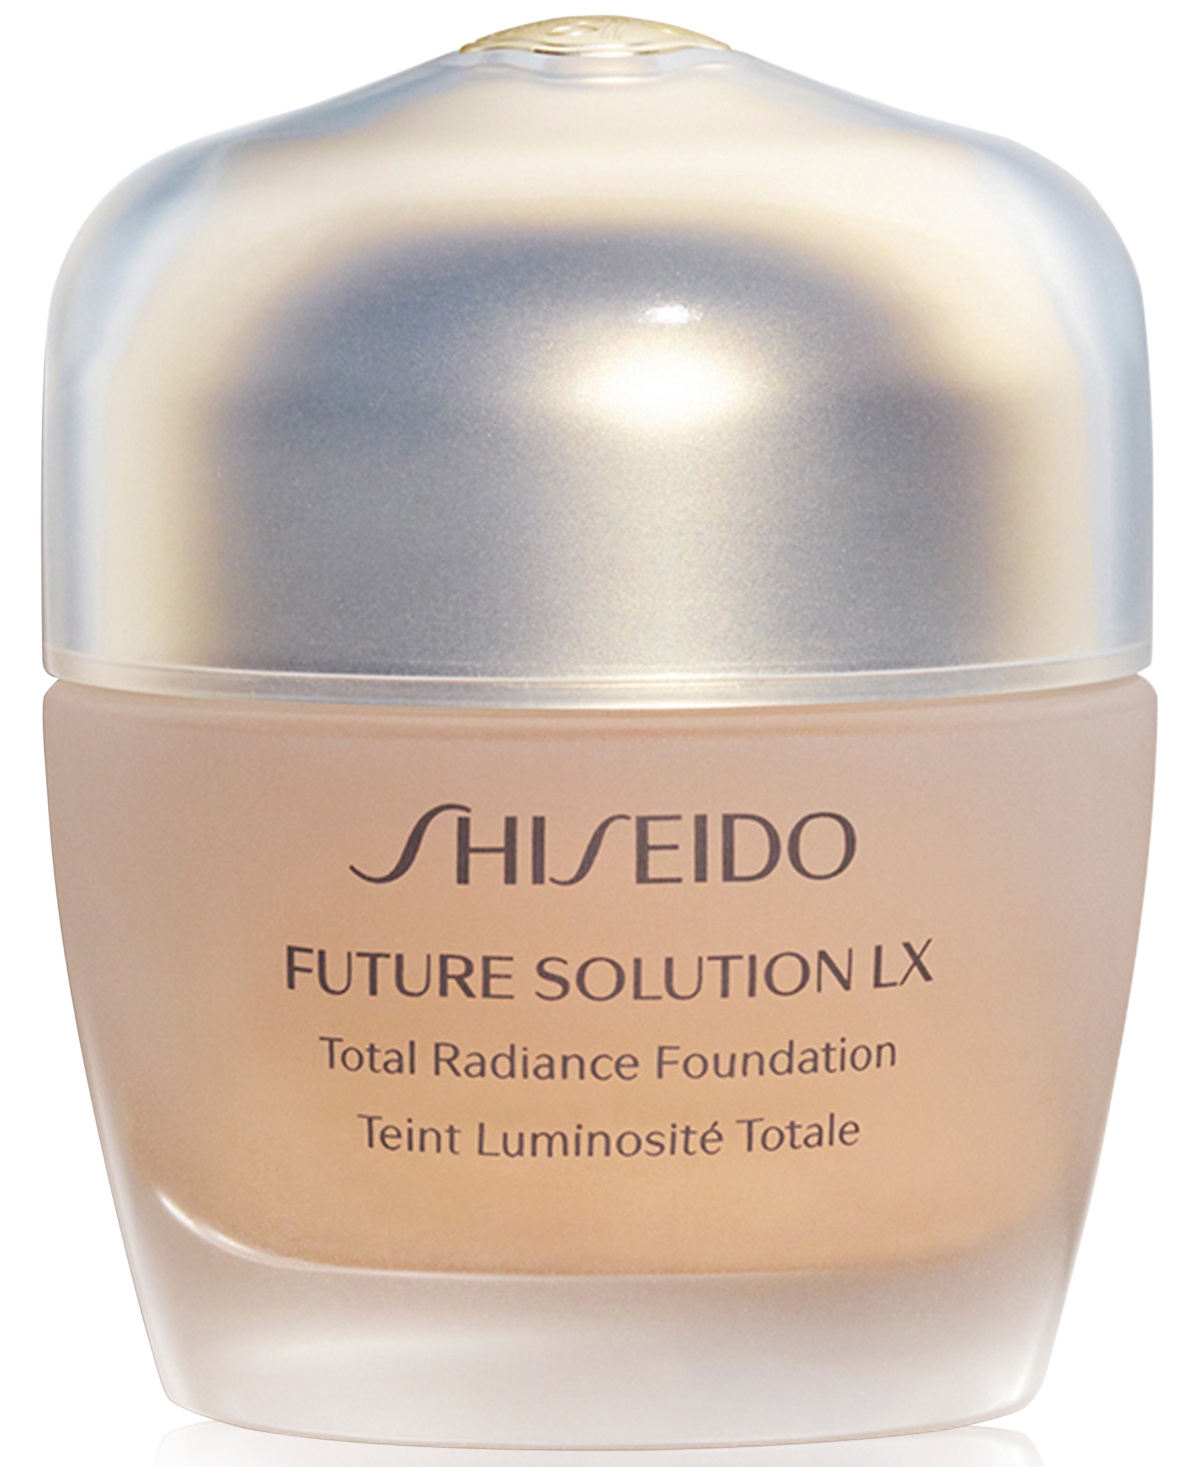 Shiseido Future Solution Lx Total Radiance Foundation Broad Spectrum Spf 20 Sunscreen, 1.2 oz In Golden